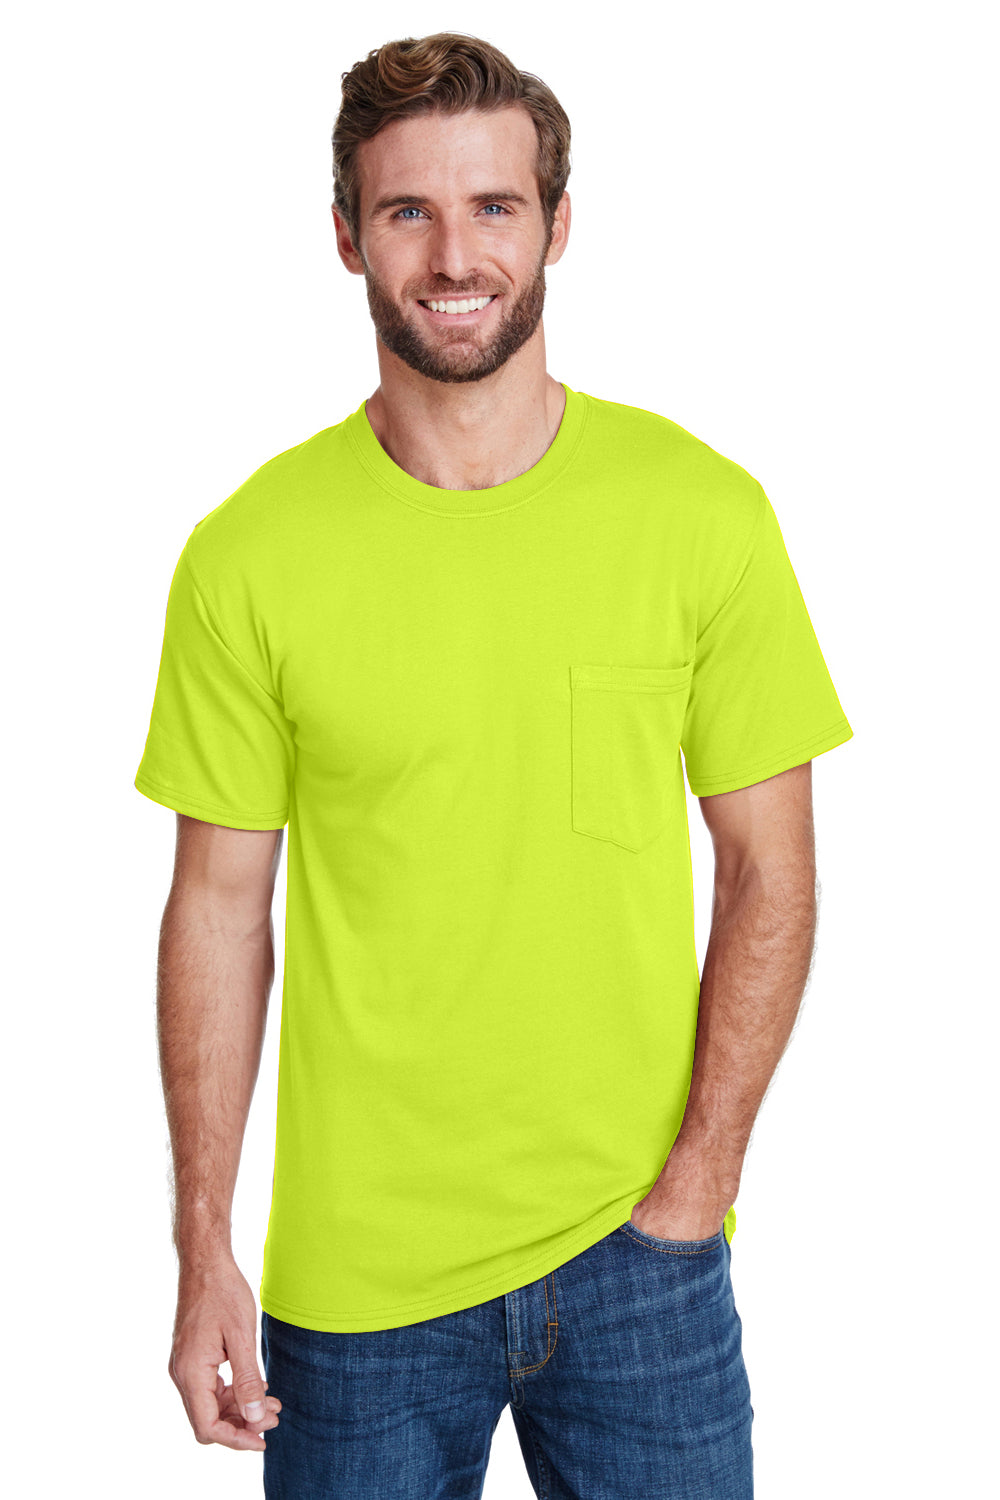 Hanes W110 Mens Workwear Short Sleeve Crewneck T-Shirt w/ Pocket Safety Green Front